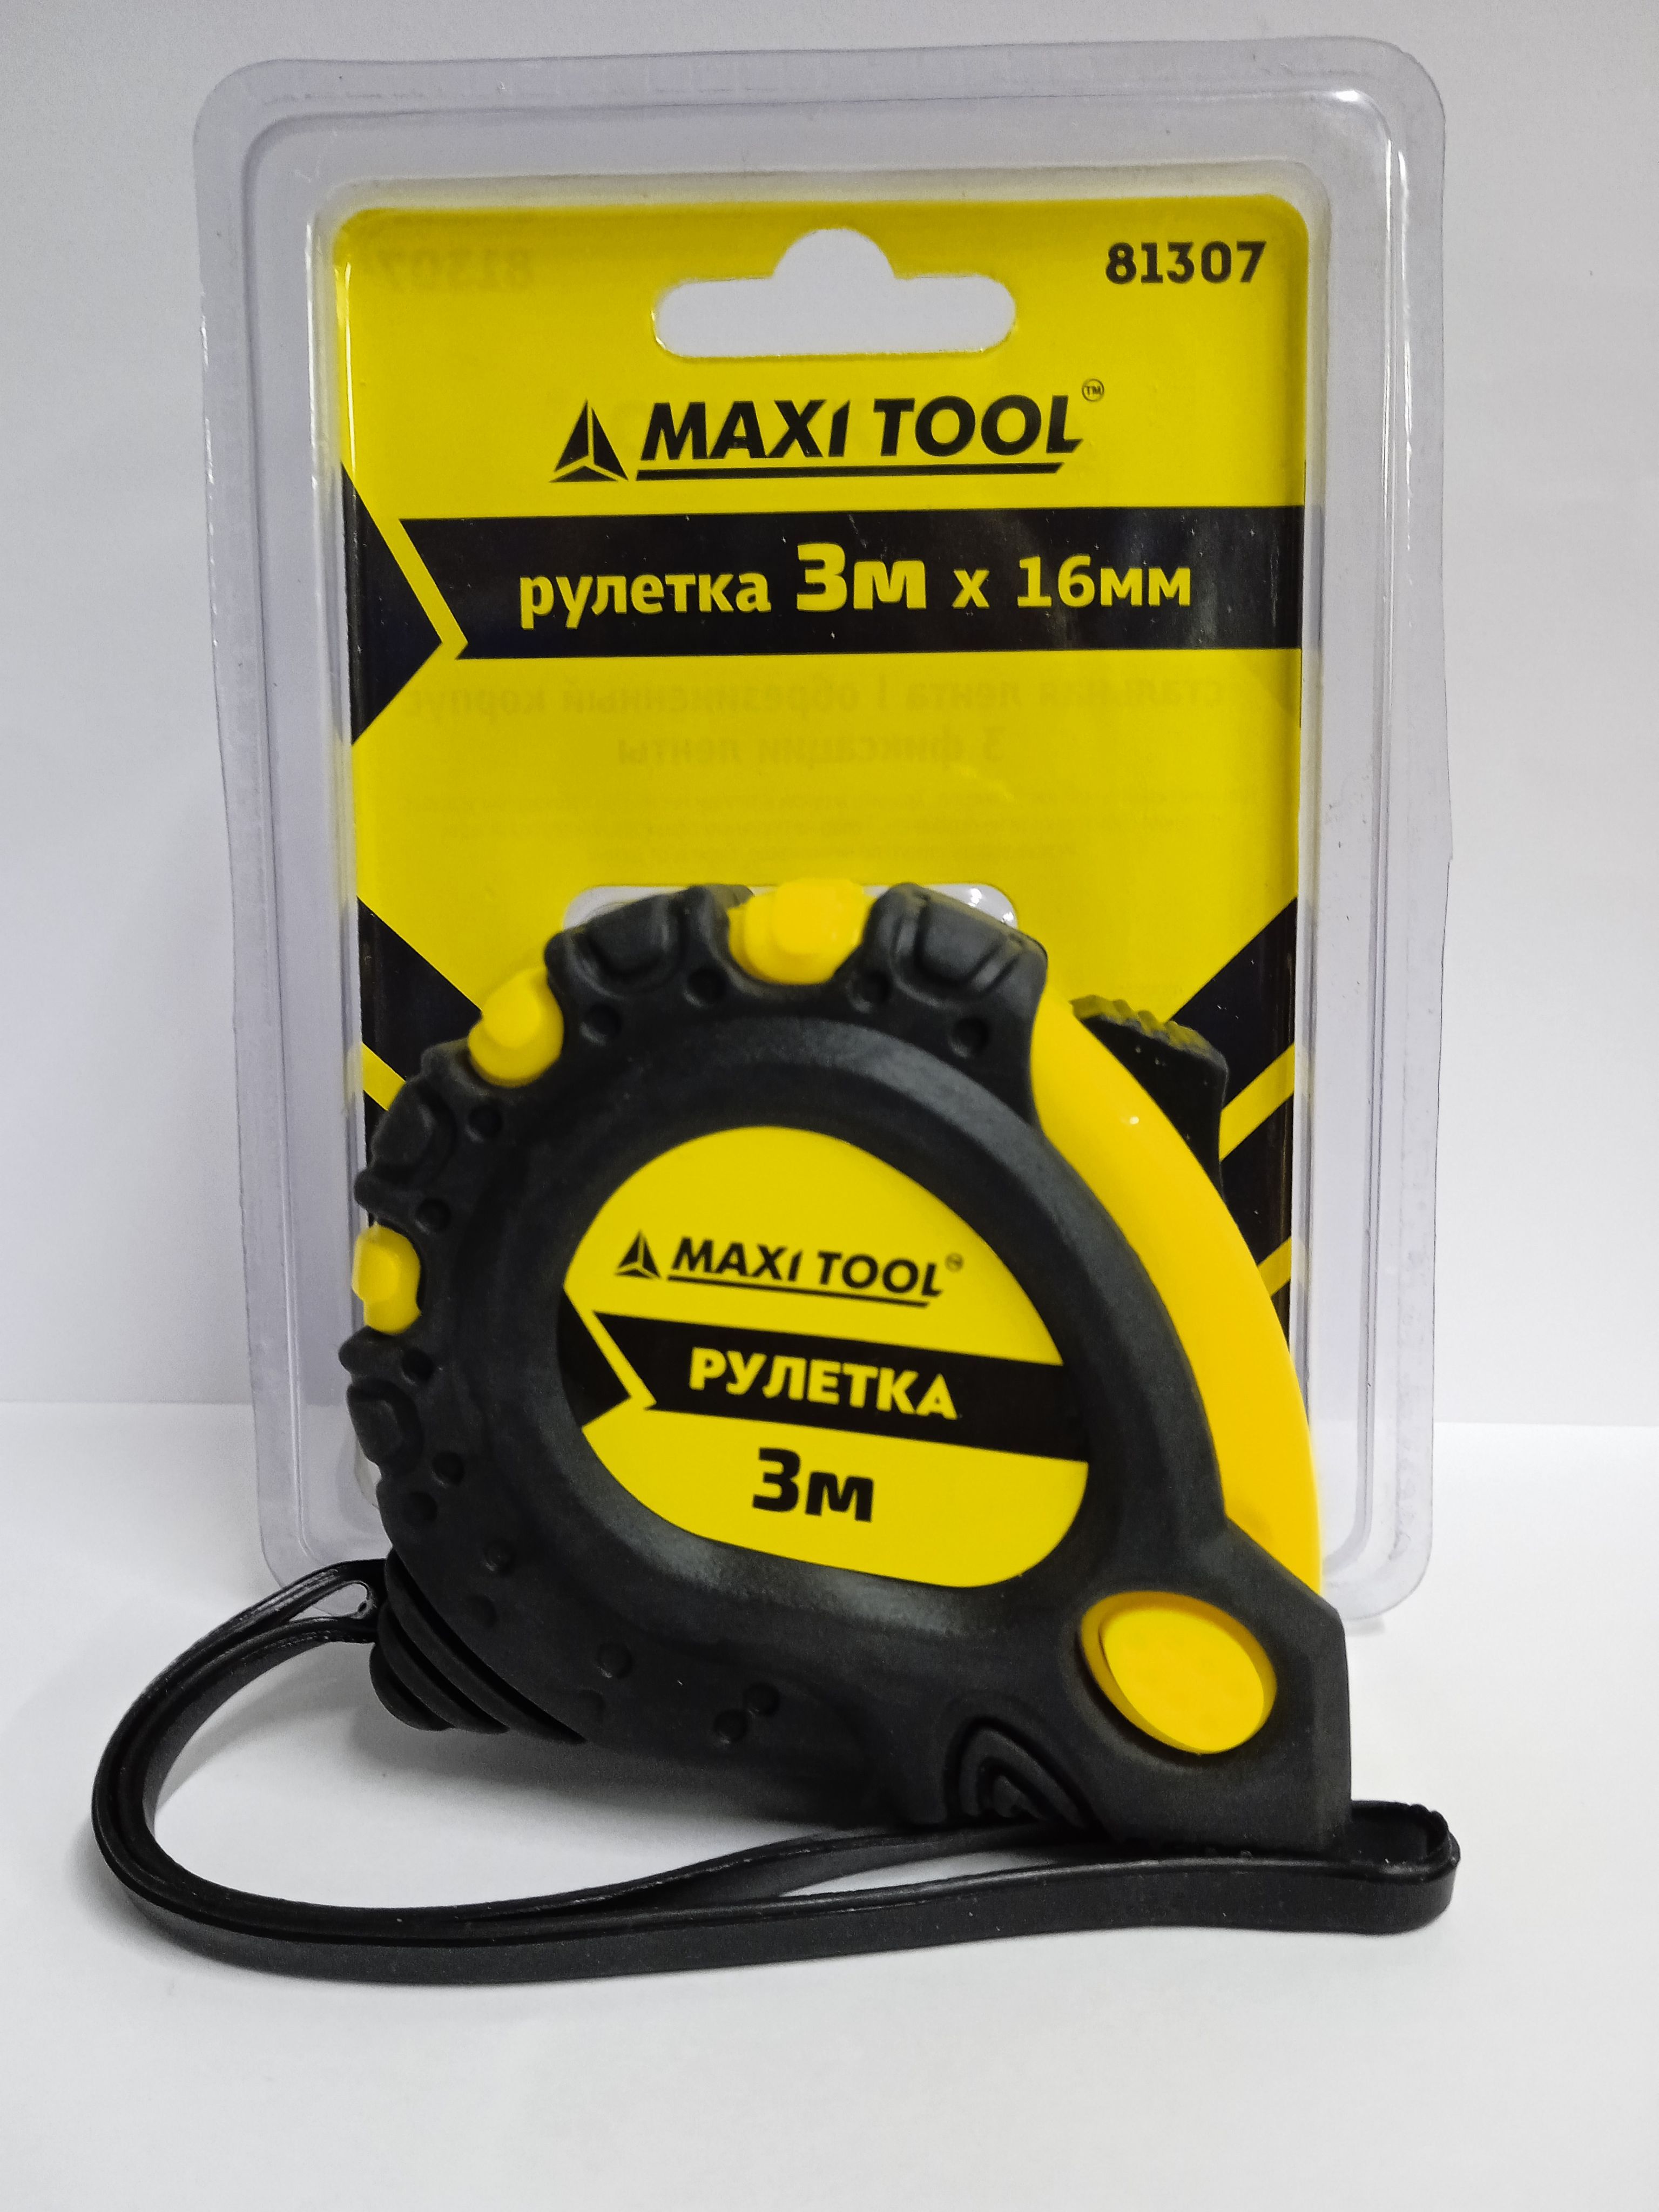 Maxi tool. Рулетка s6a 5м*19мм обрезин. Корп. 3 фикс. MAXITOOL 81308. Отвертка MAXITOOL 89452. Рулетка «100% защита» 3 м. Рулетка AVS mt7525r.